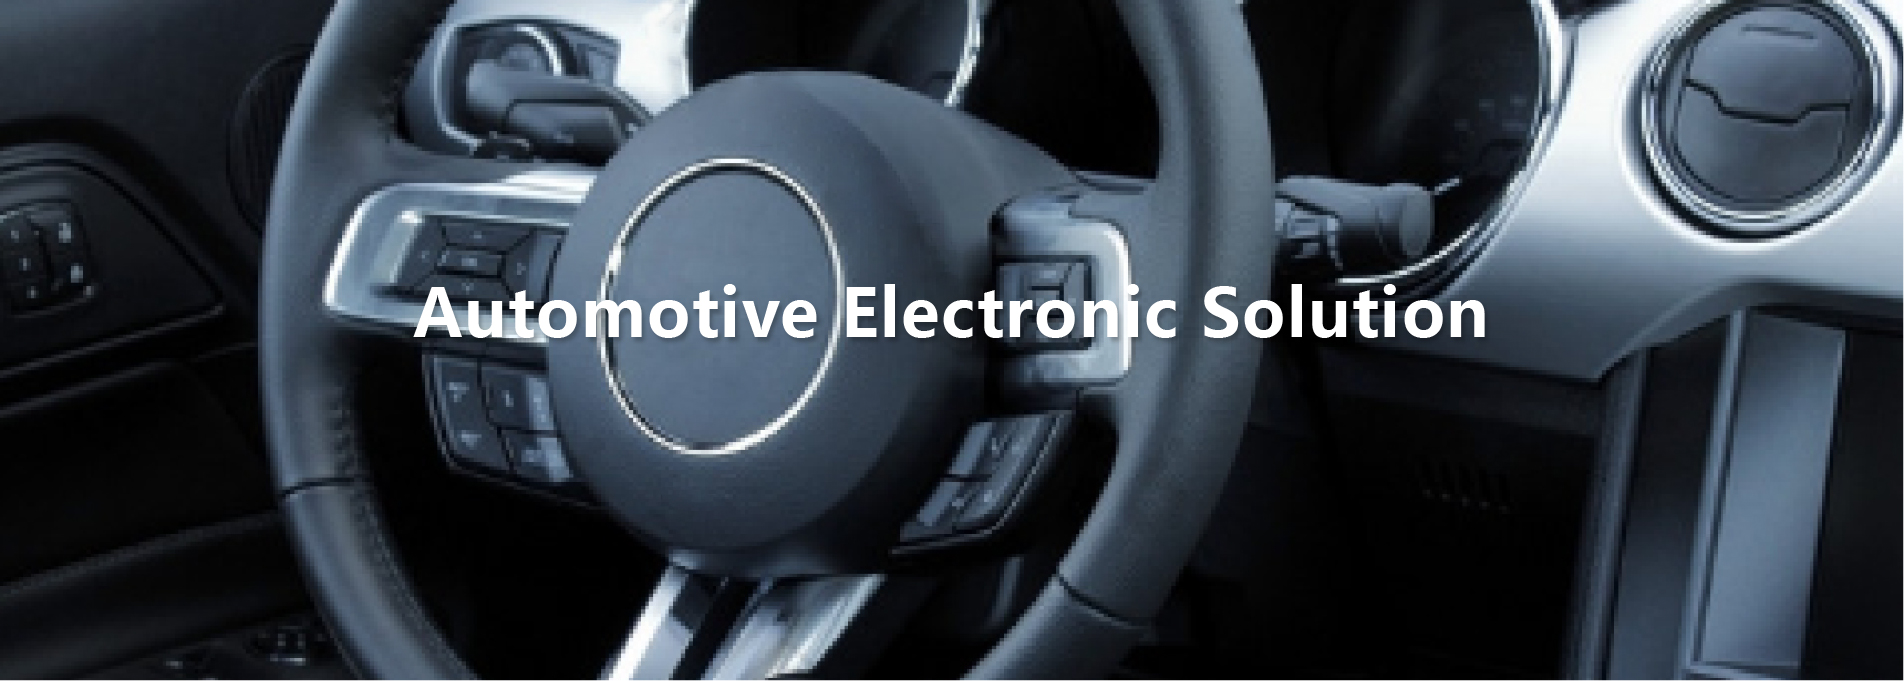 Automotive Electronic Solution